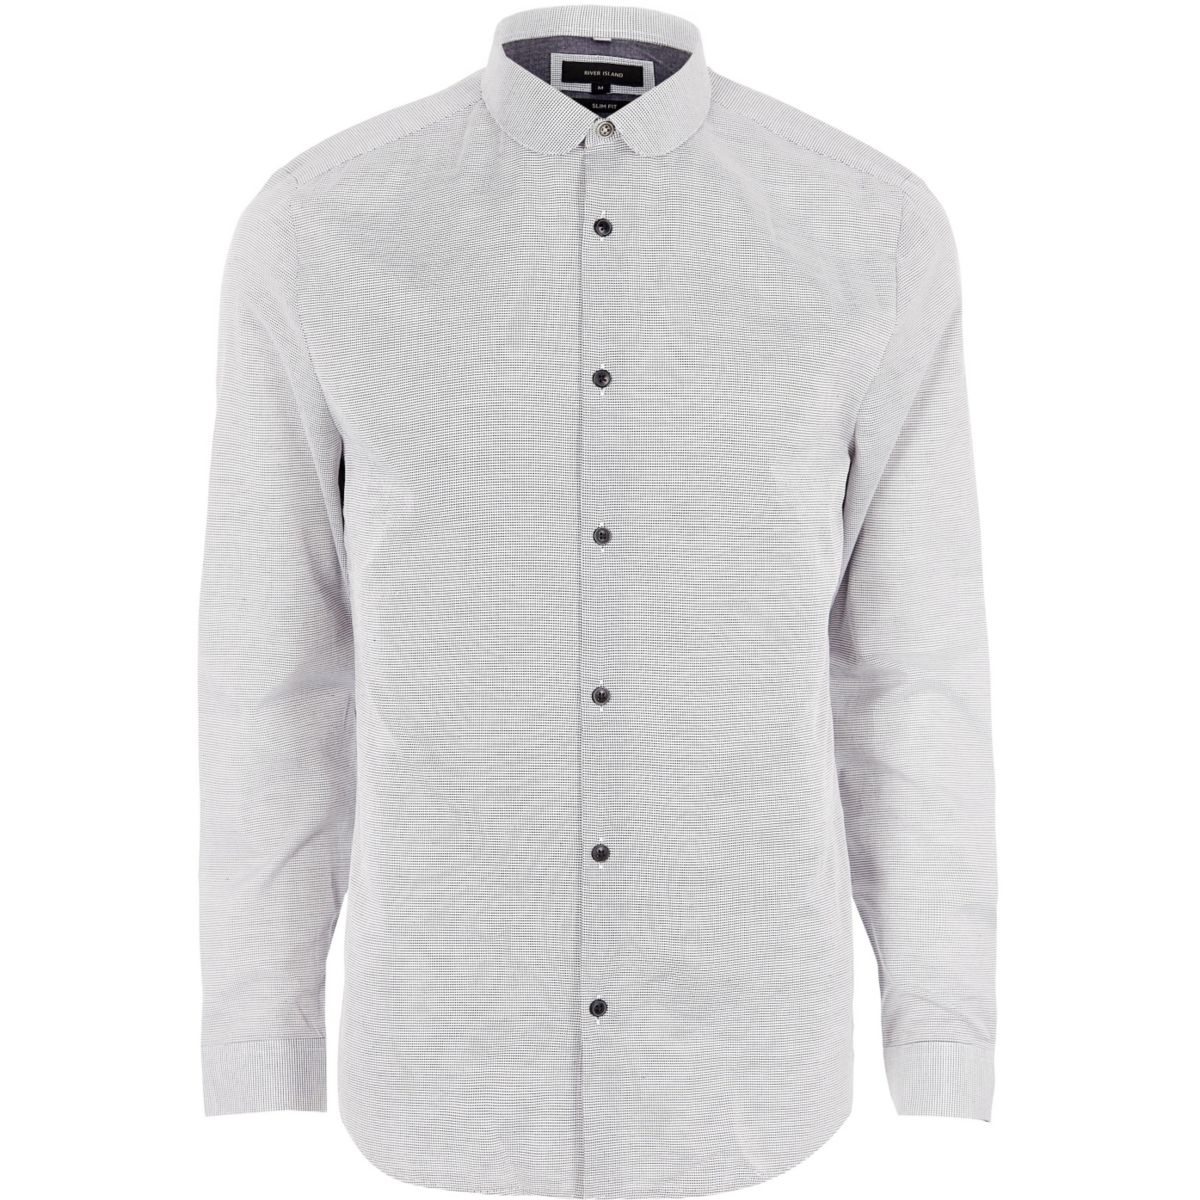 Grey penny collar slim fit shirt - Shirts - Sale - men